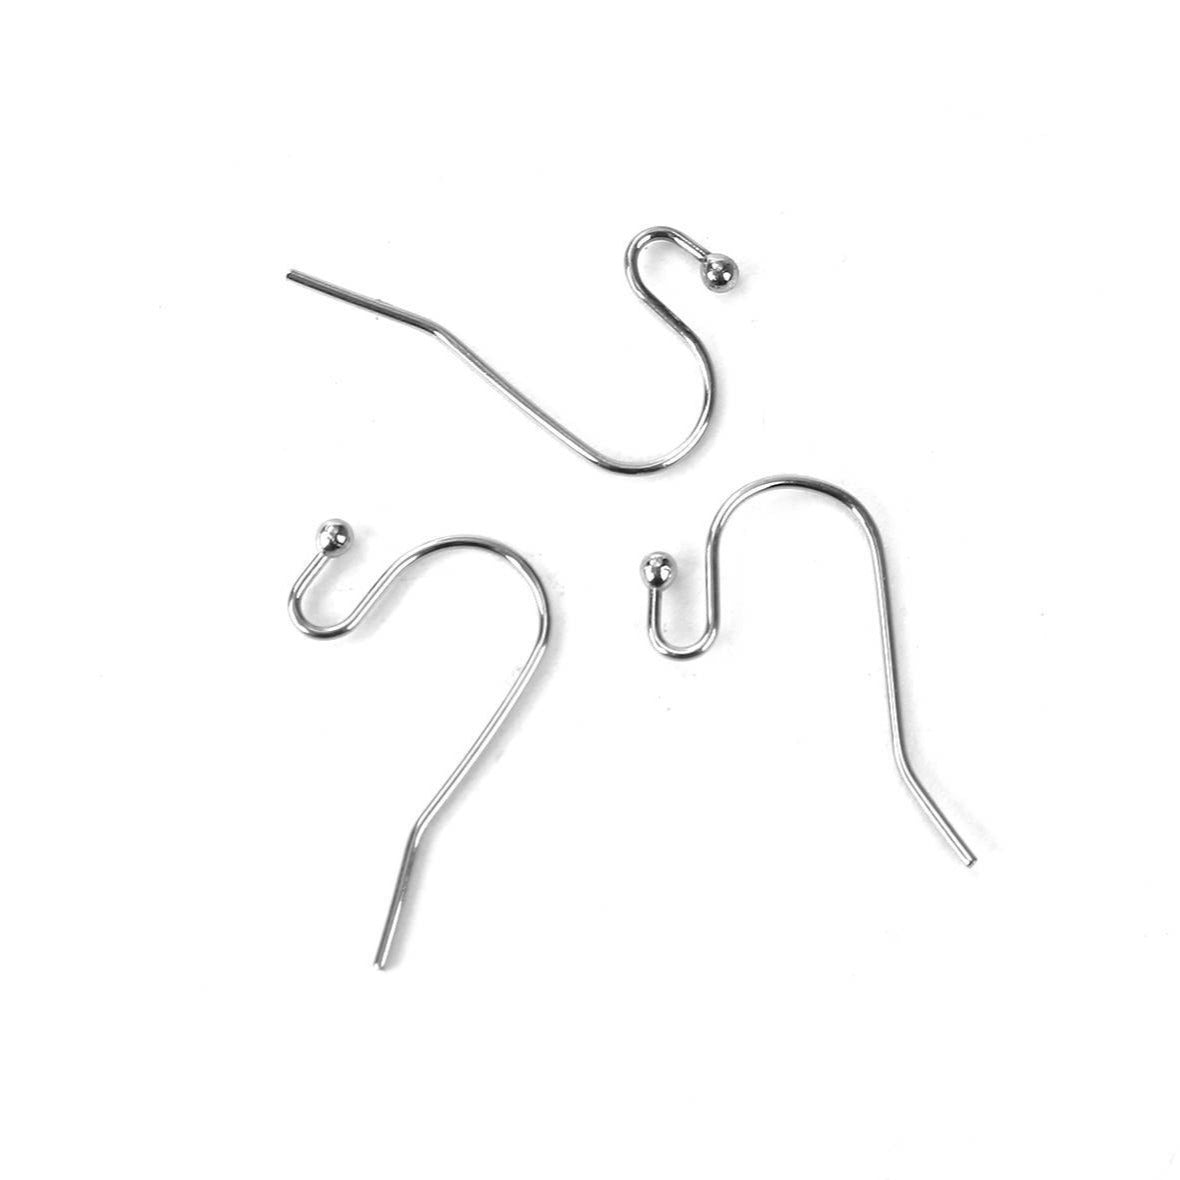 Earnut stainless steel earring back stopper hypoallergenic 12mm